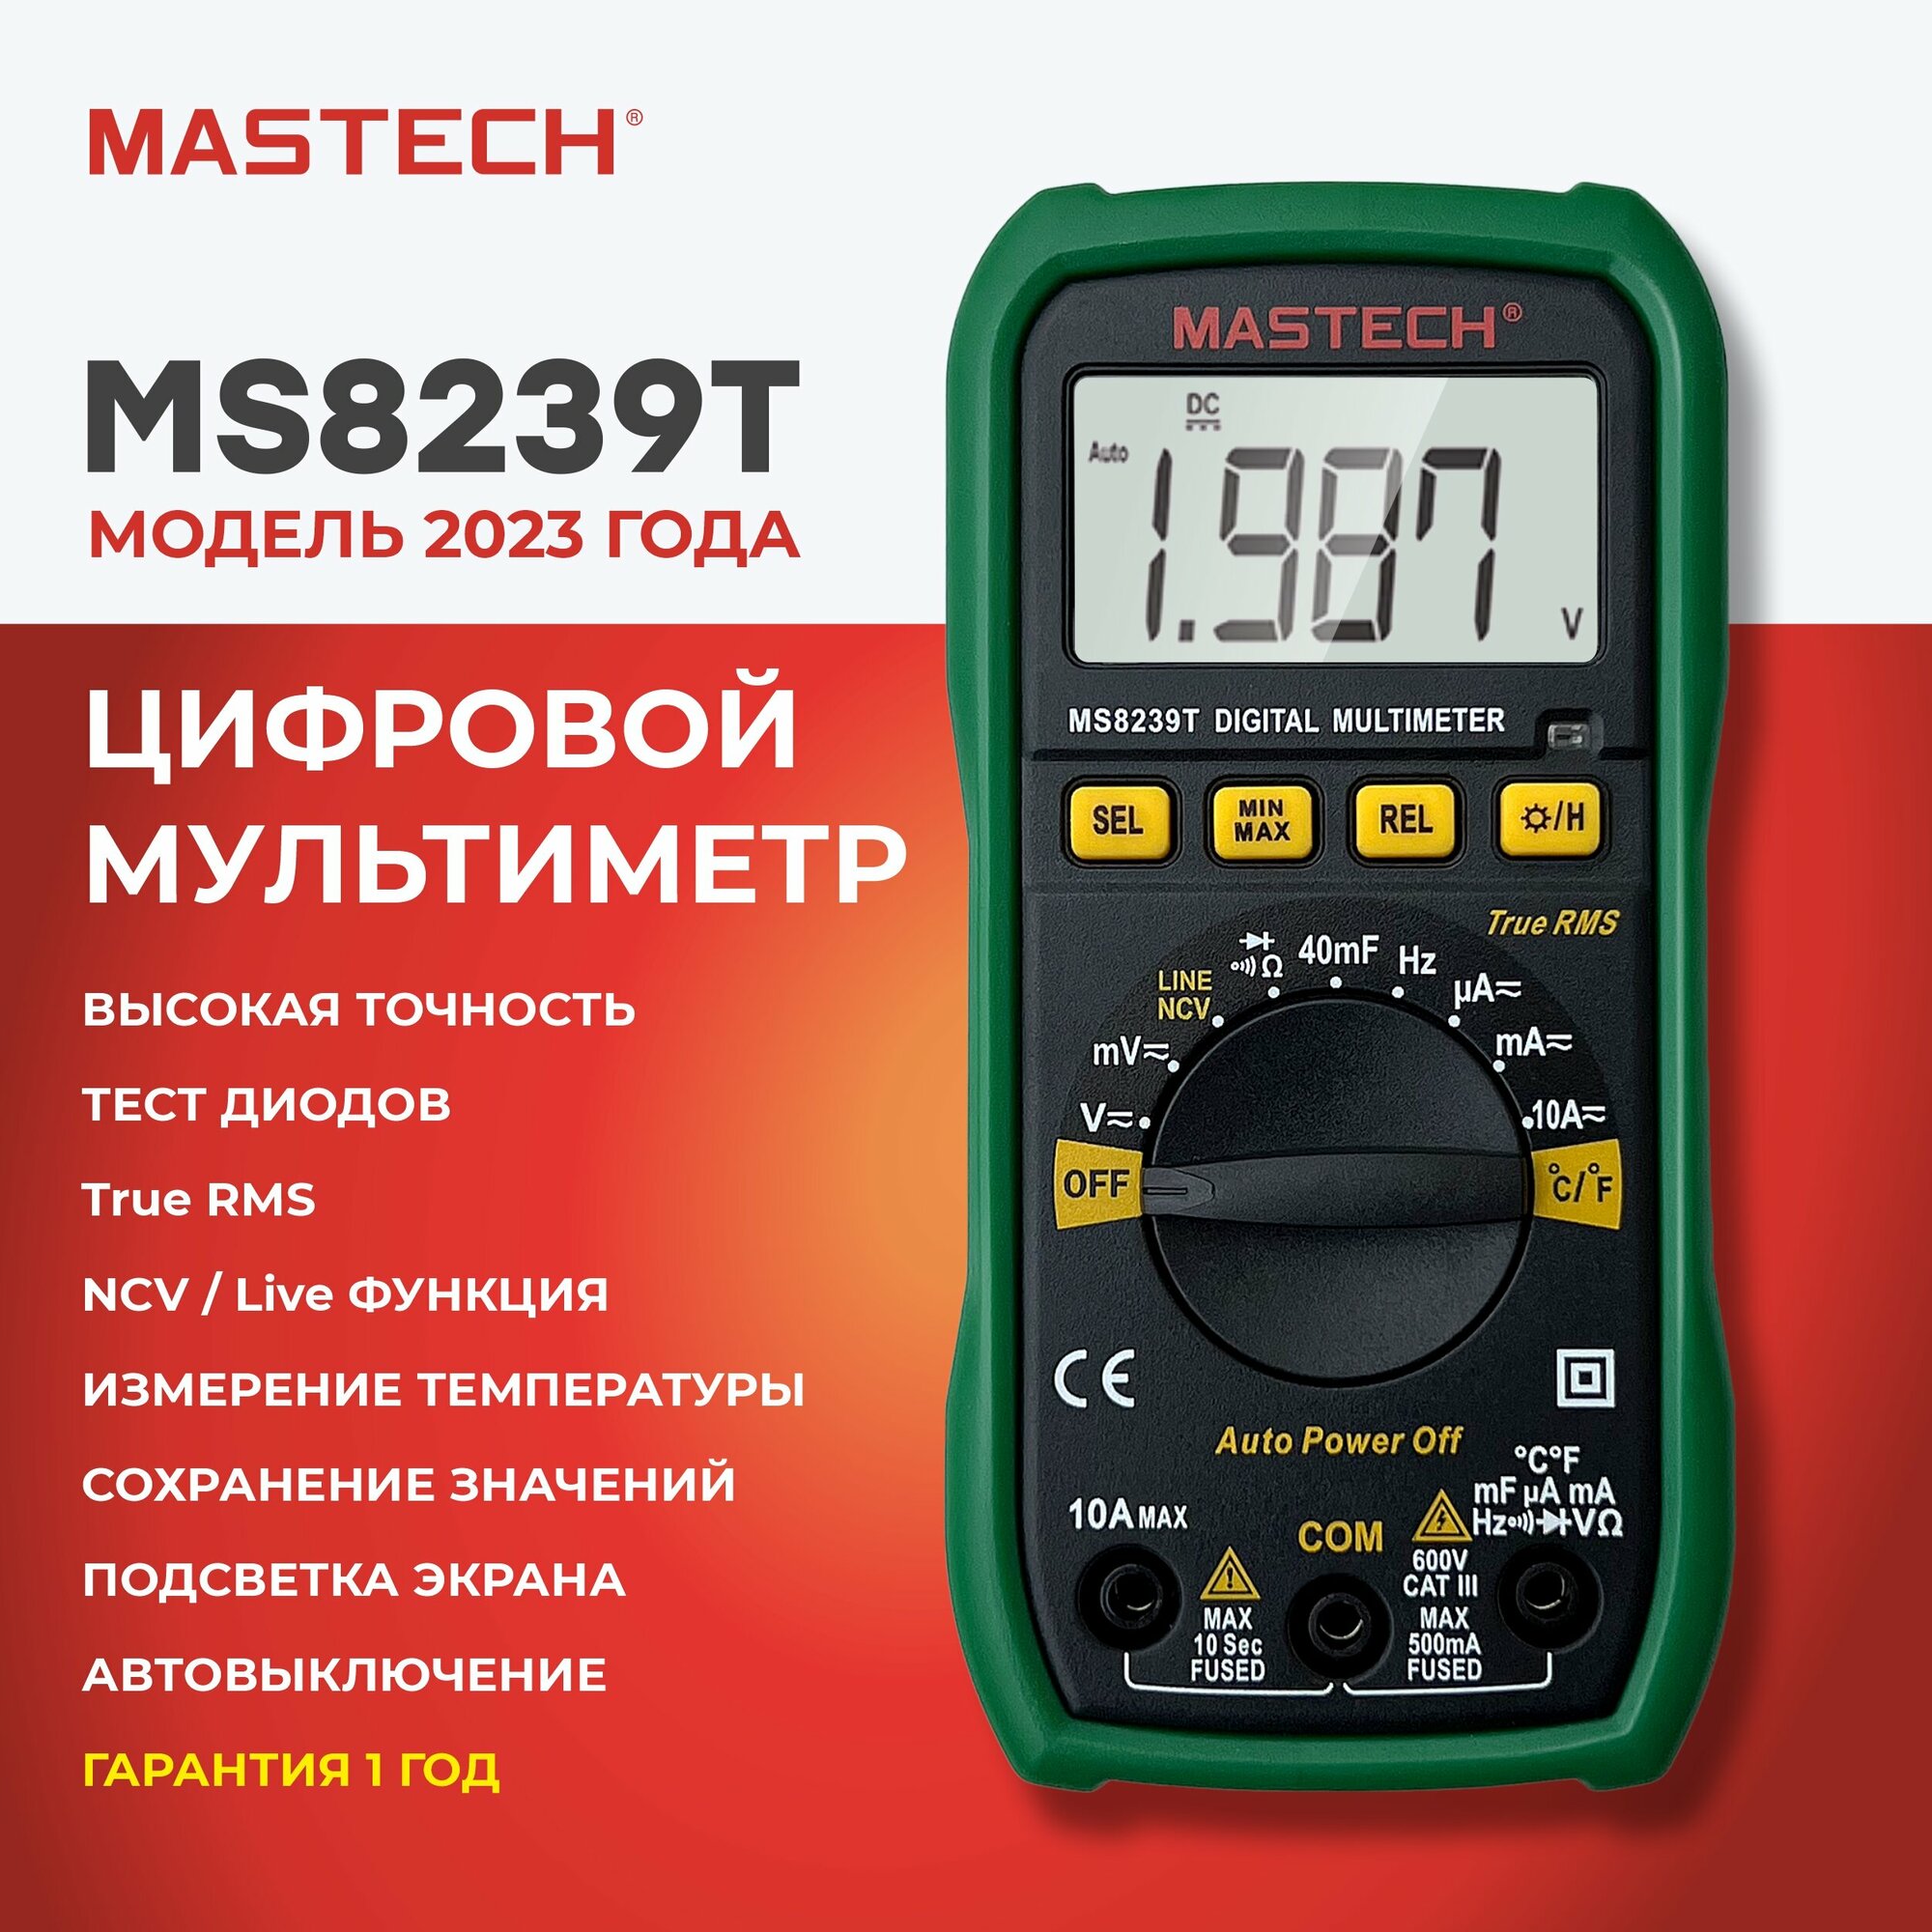 MS8239T, Мультиметр цифровой, Mastech